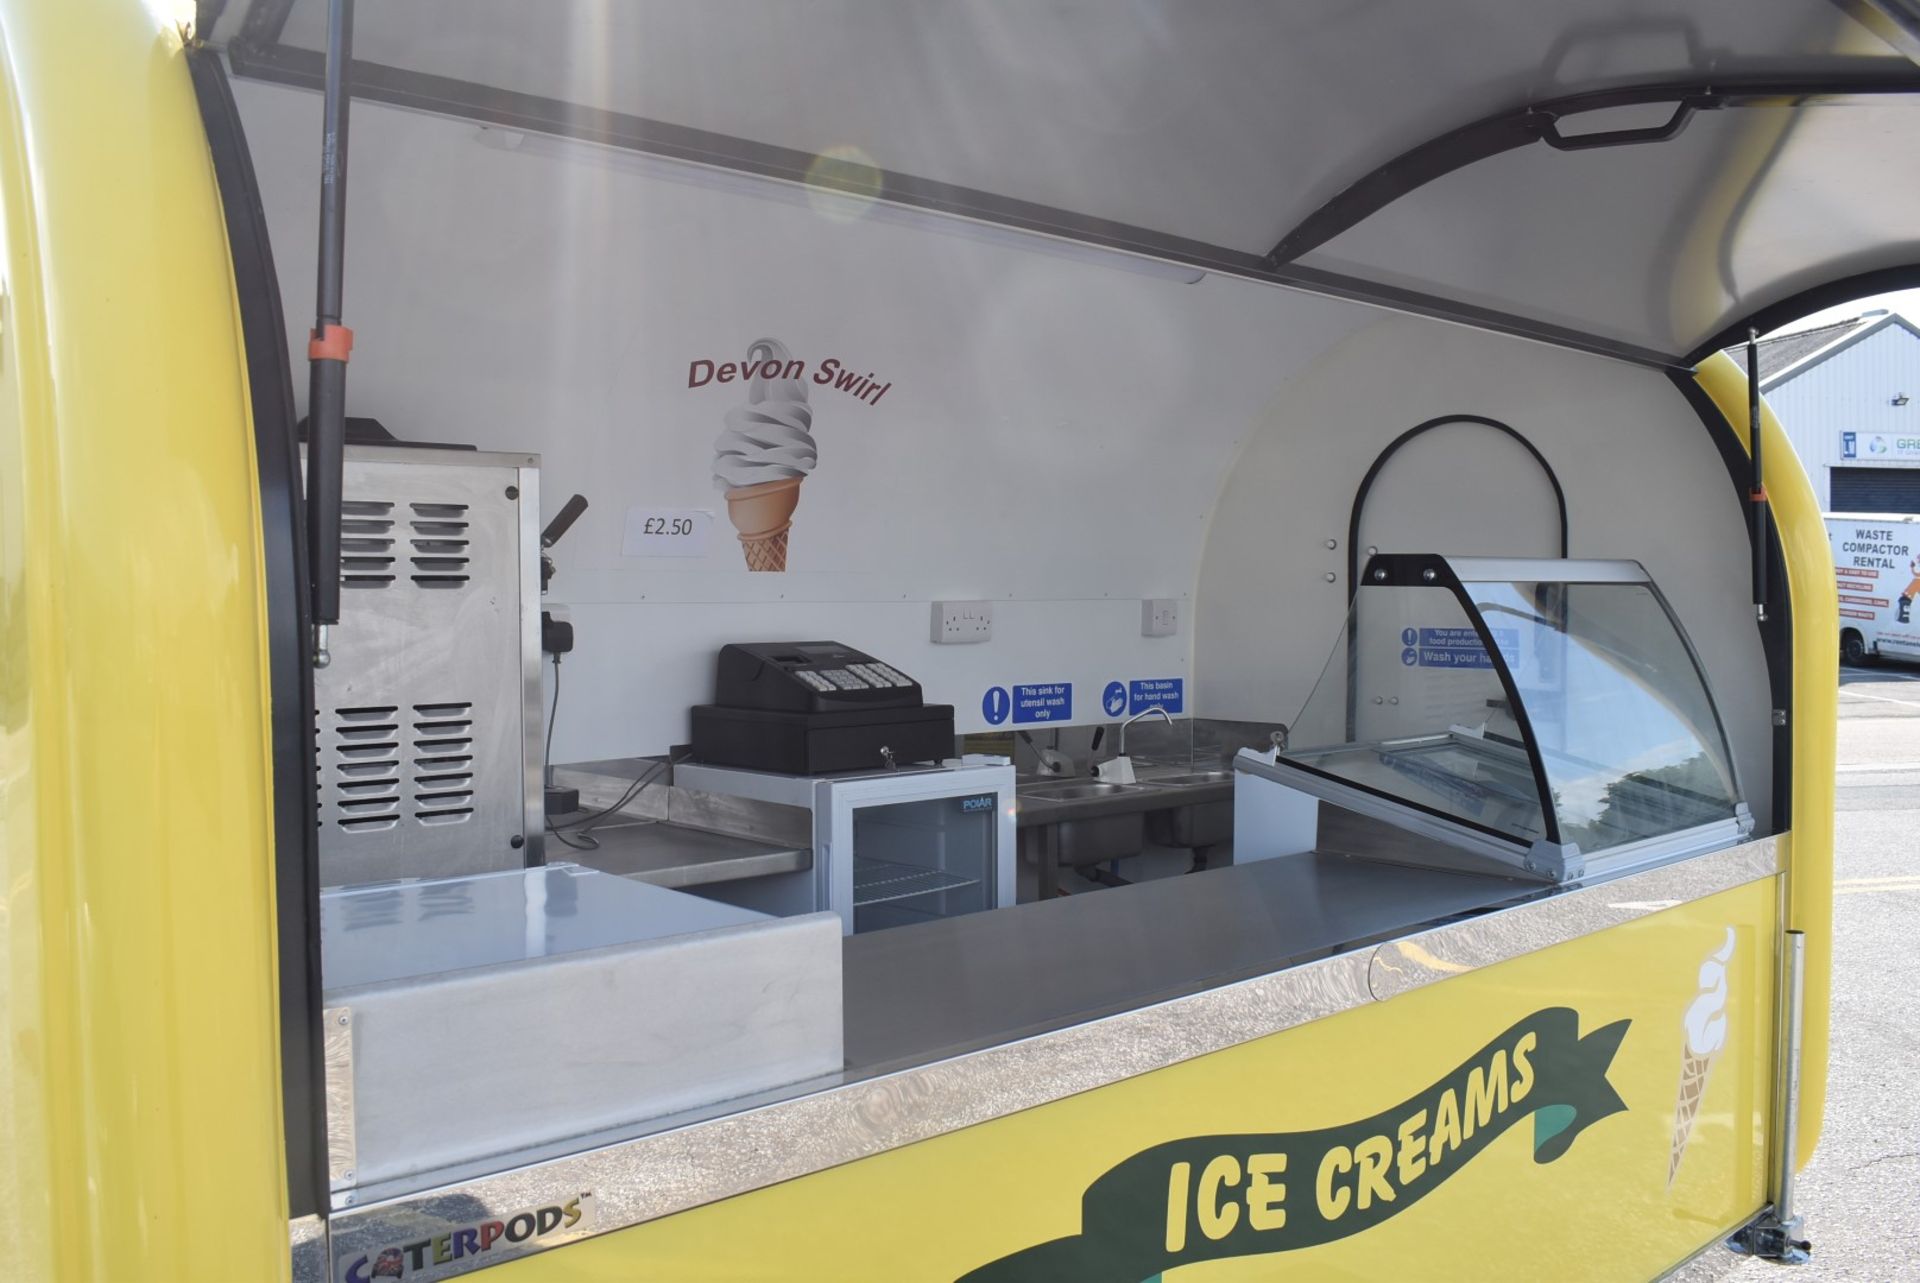 1 x Ice Cream Trailer Pod With Blue Ice T5 Ice Cream Machine, Chest Freezer, Cash Register & More! - Image 24 of 120